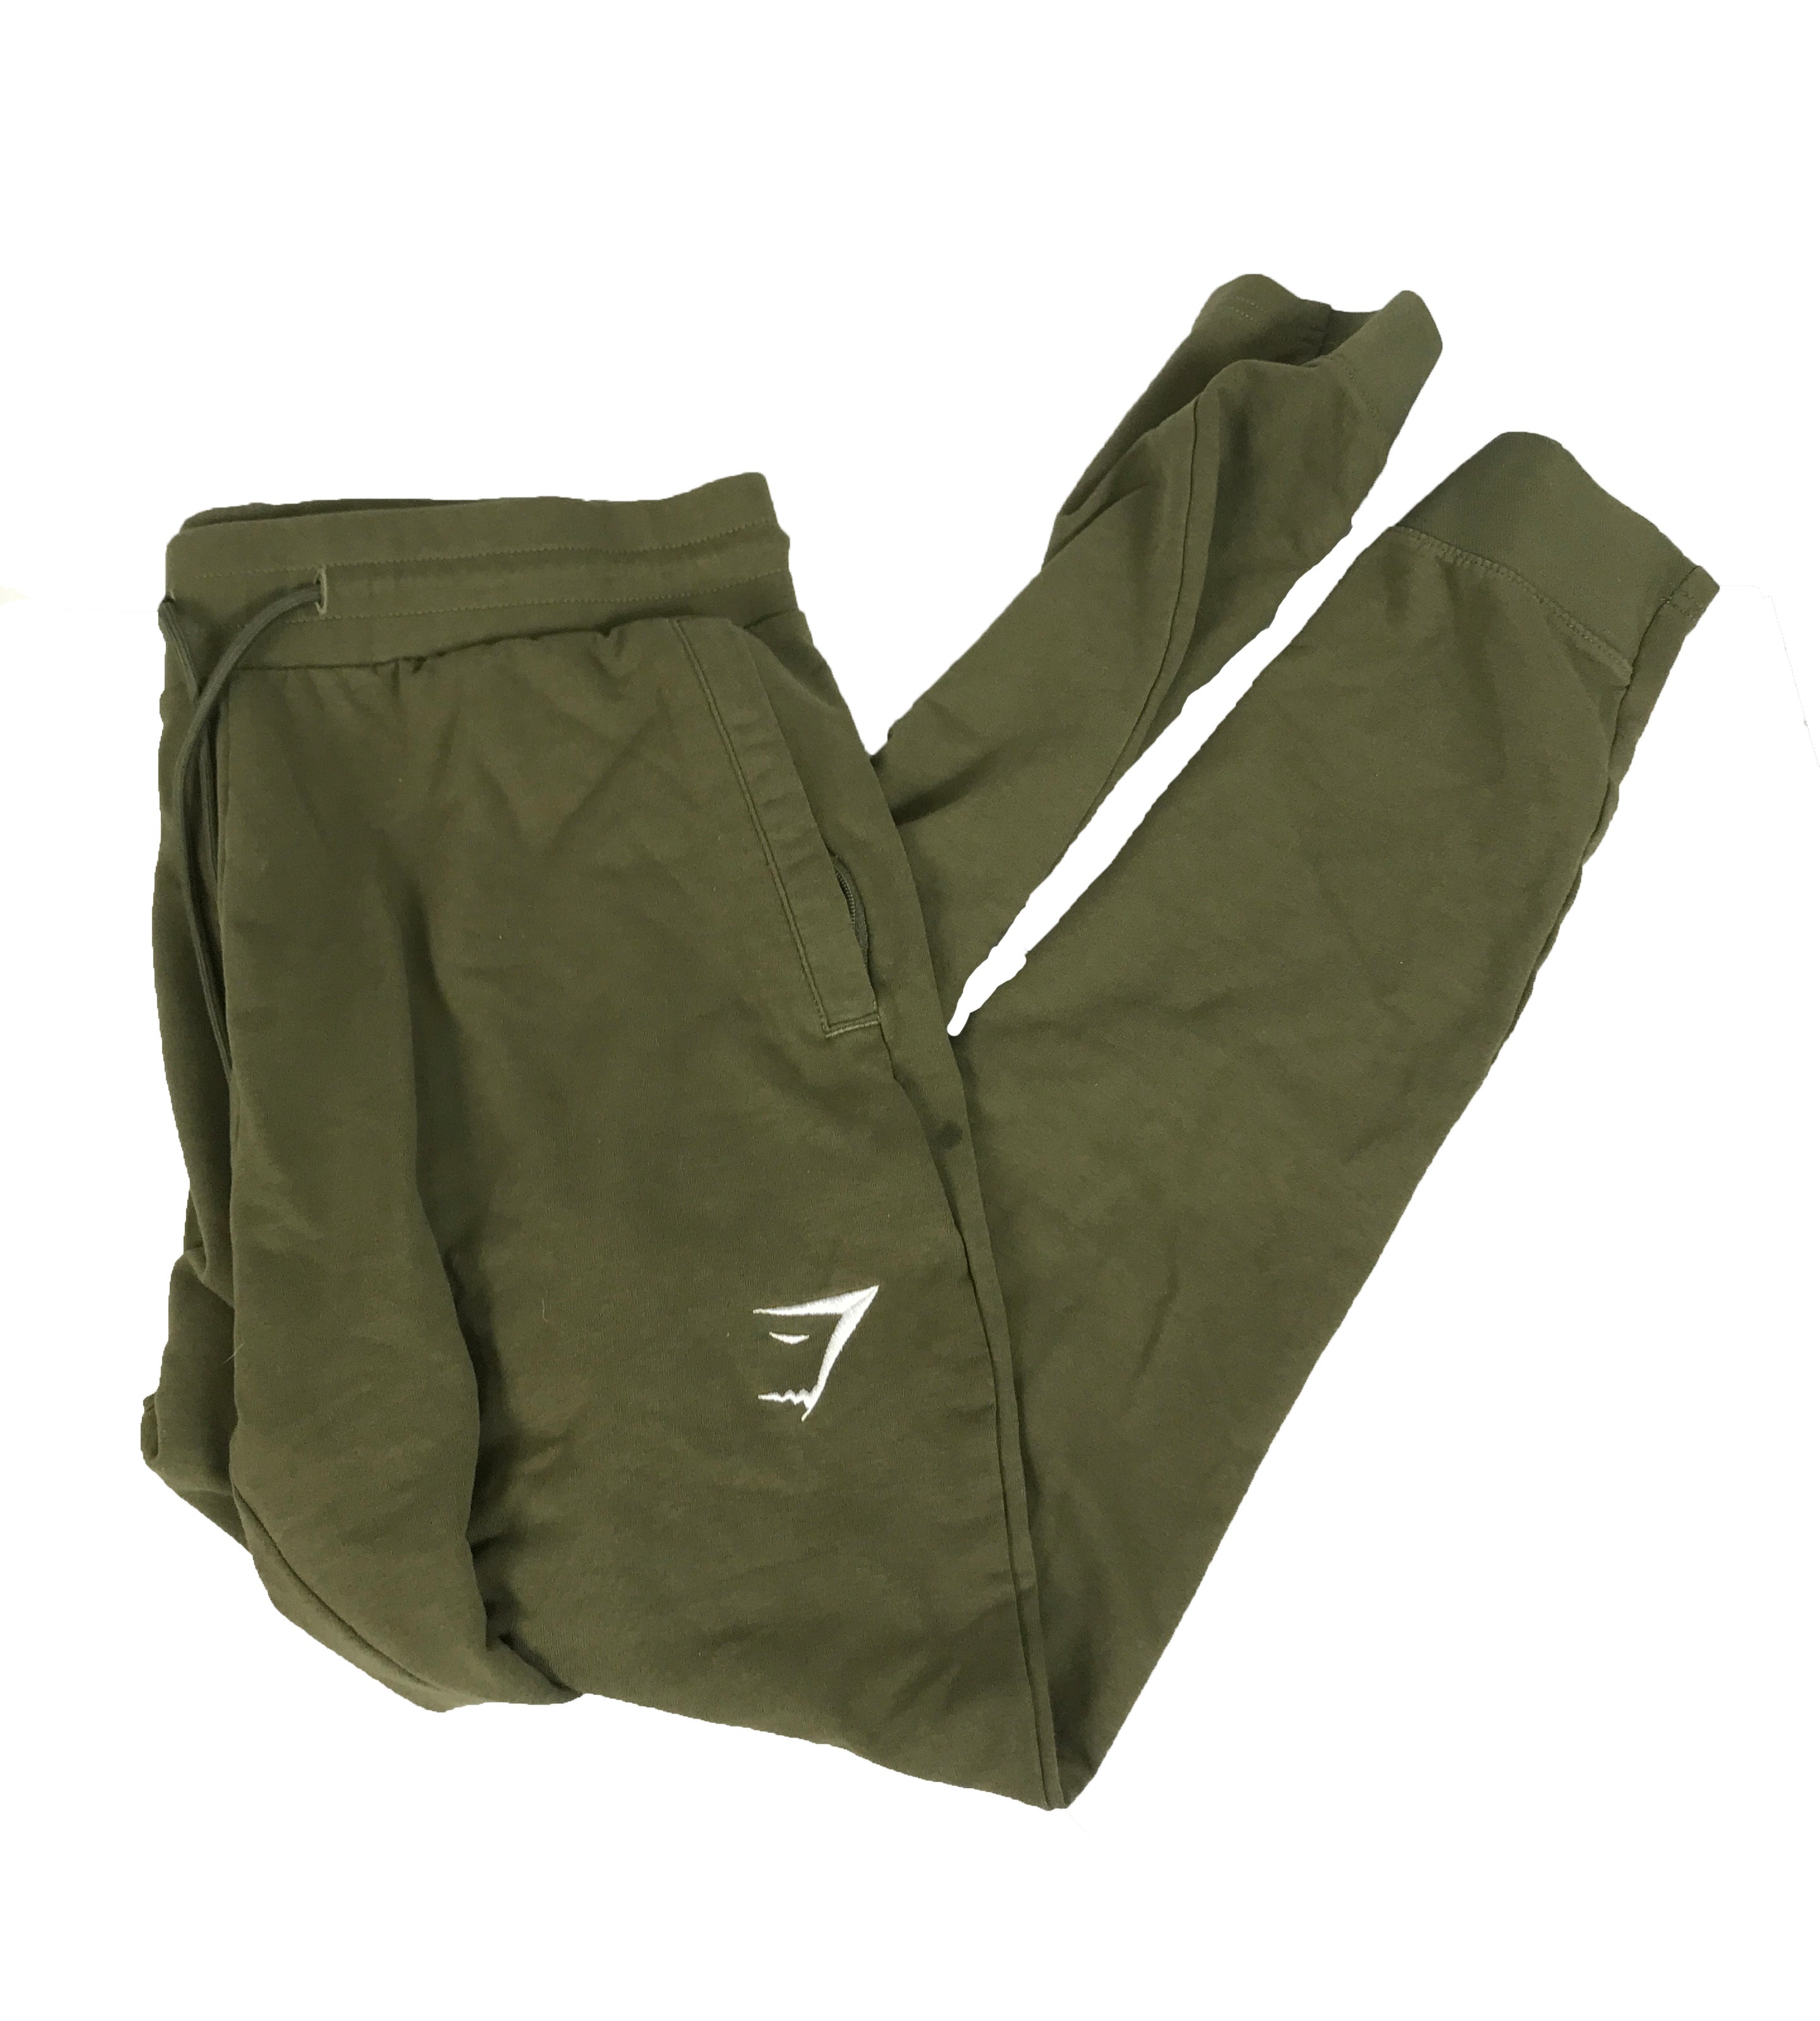 Gym Shark Olive Green Sweatpants Men's Size Small – MSU Surplus Store